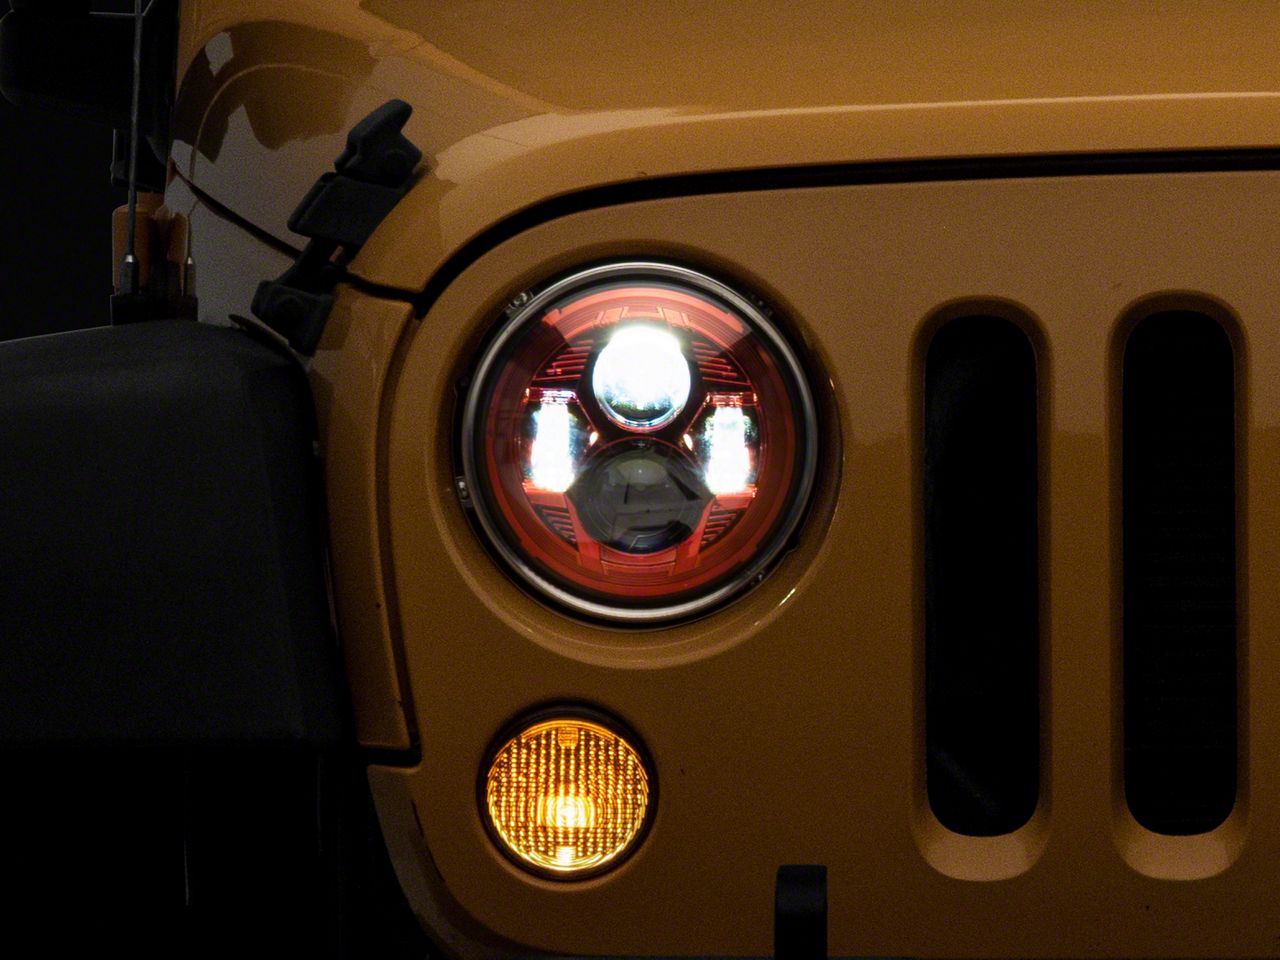 DOT Approved 7" LED Projectors Headlights Daytime Lights for Jeep JK 07-18